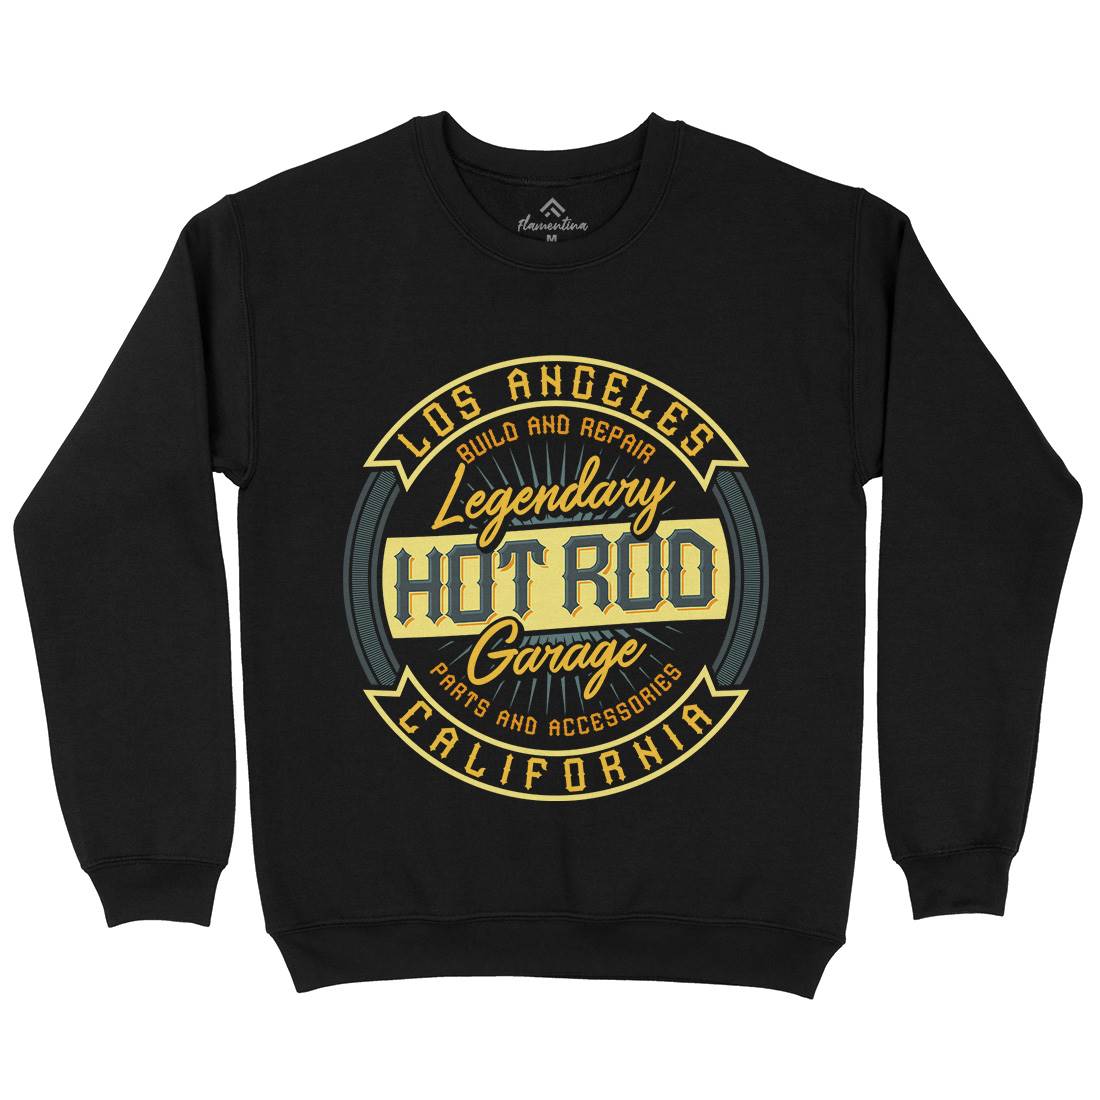 Hot Rod Kids Crew Neck Sweatshirt Cars B306